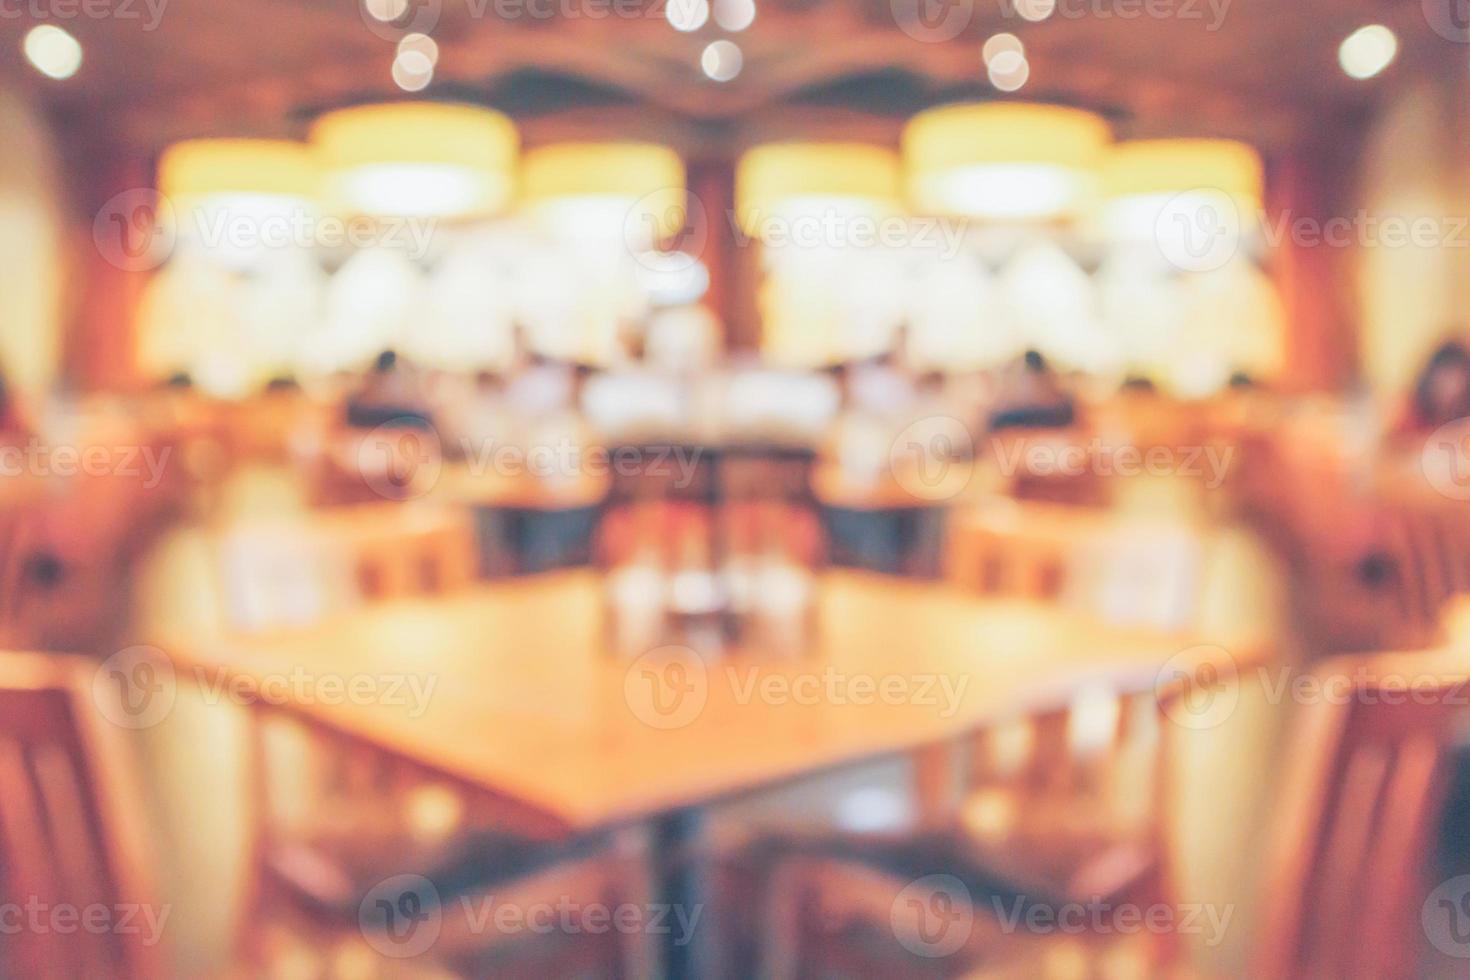 cafe restaurant interior blurred abstract vintage background photo